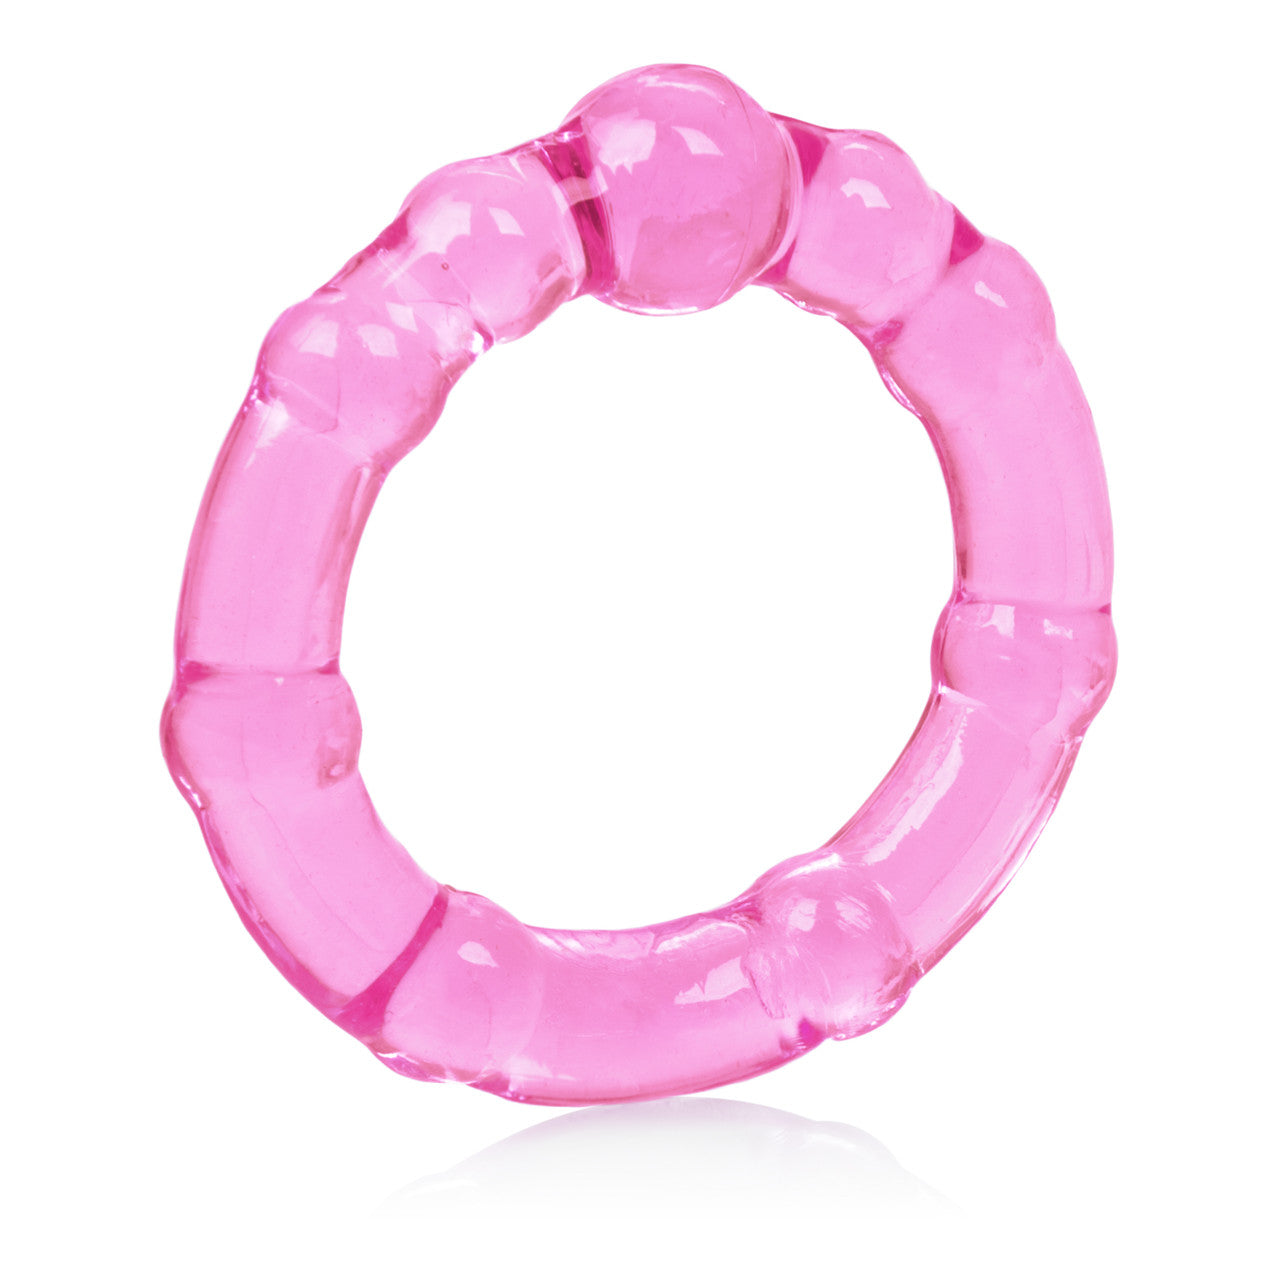 Island Rings™ - Pink